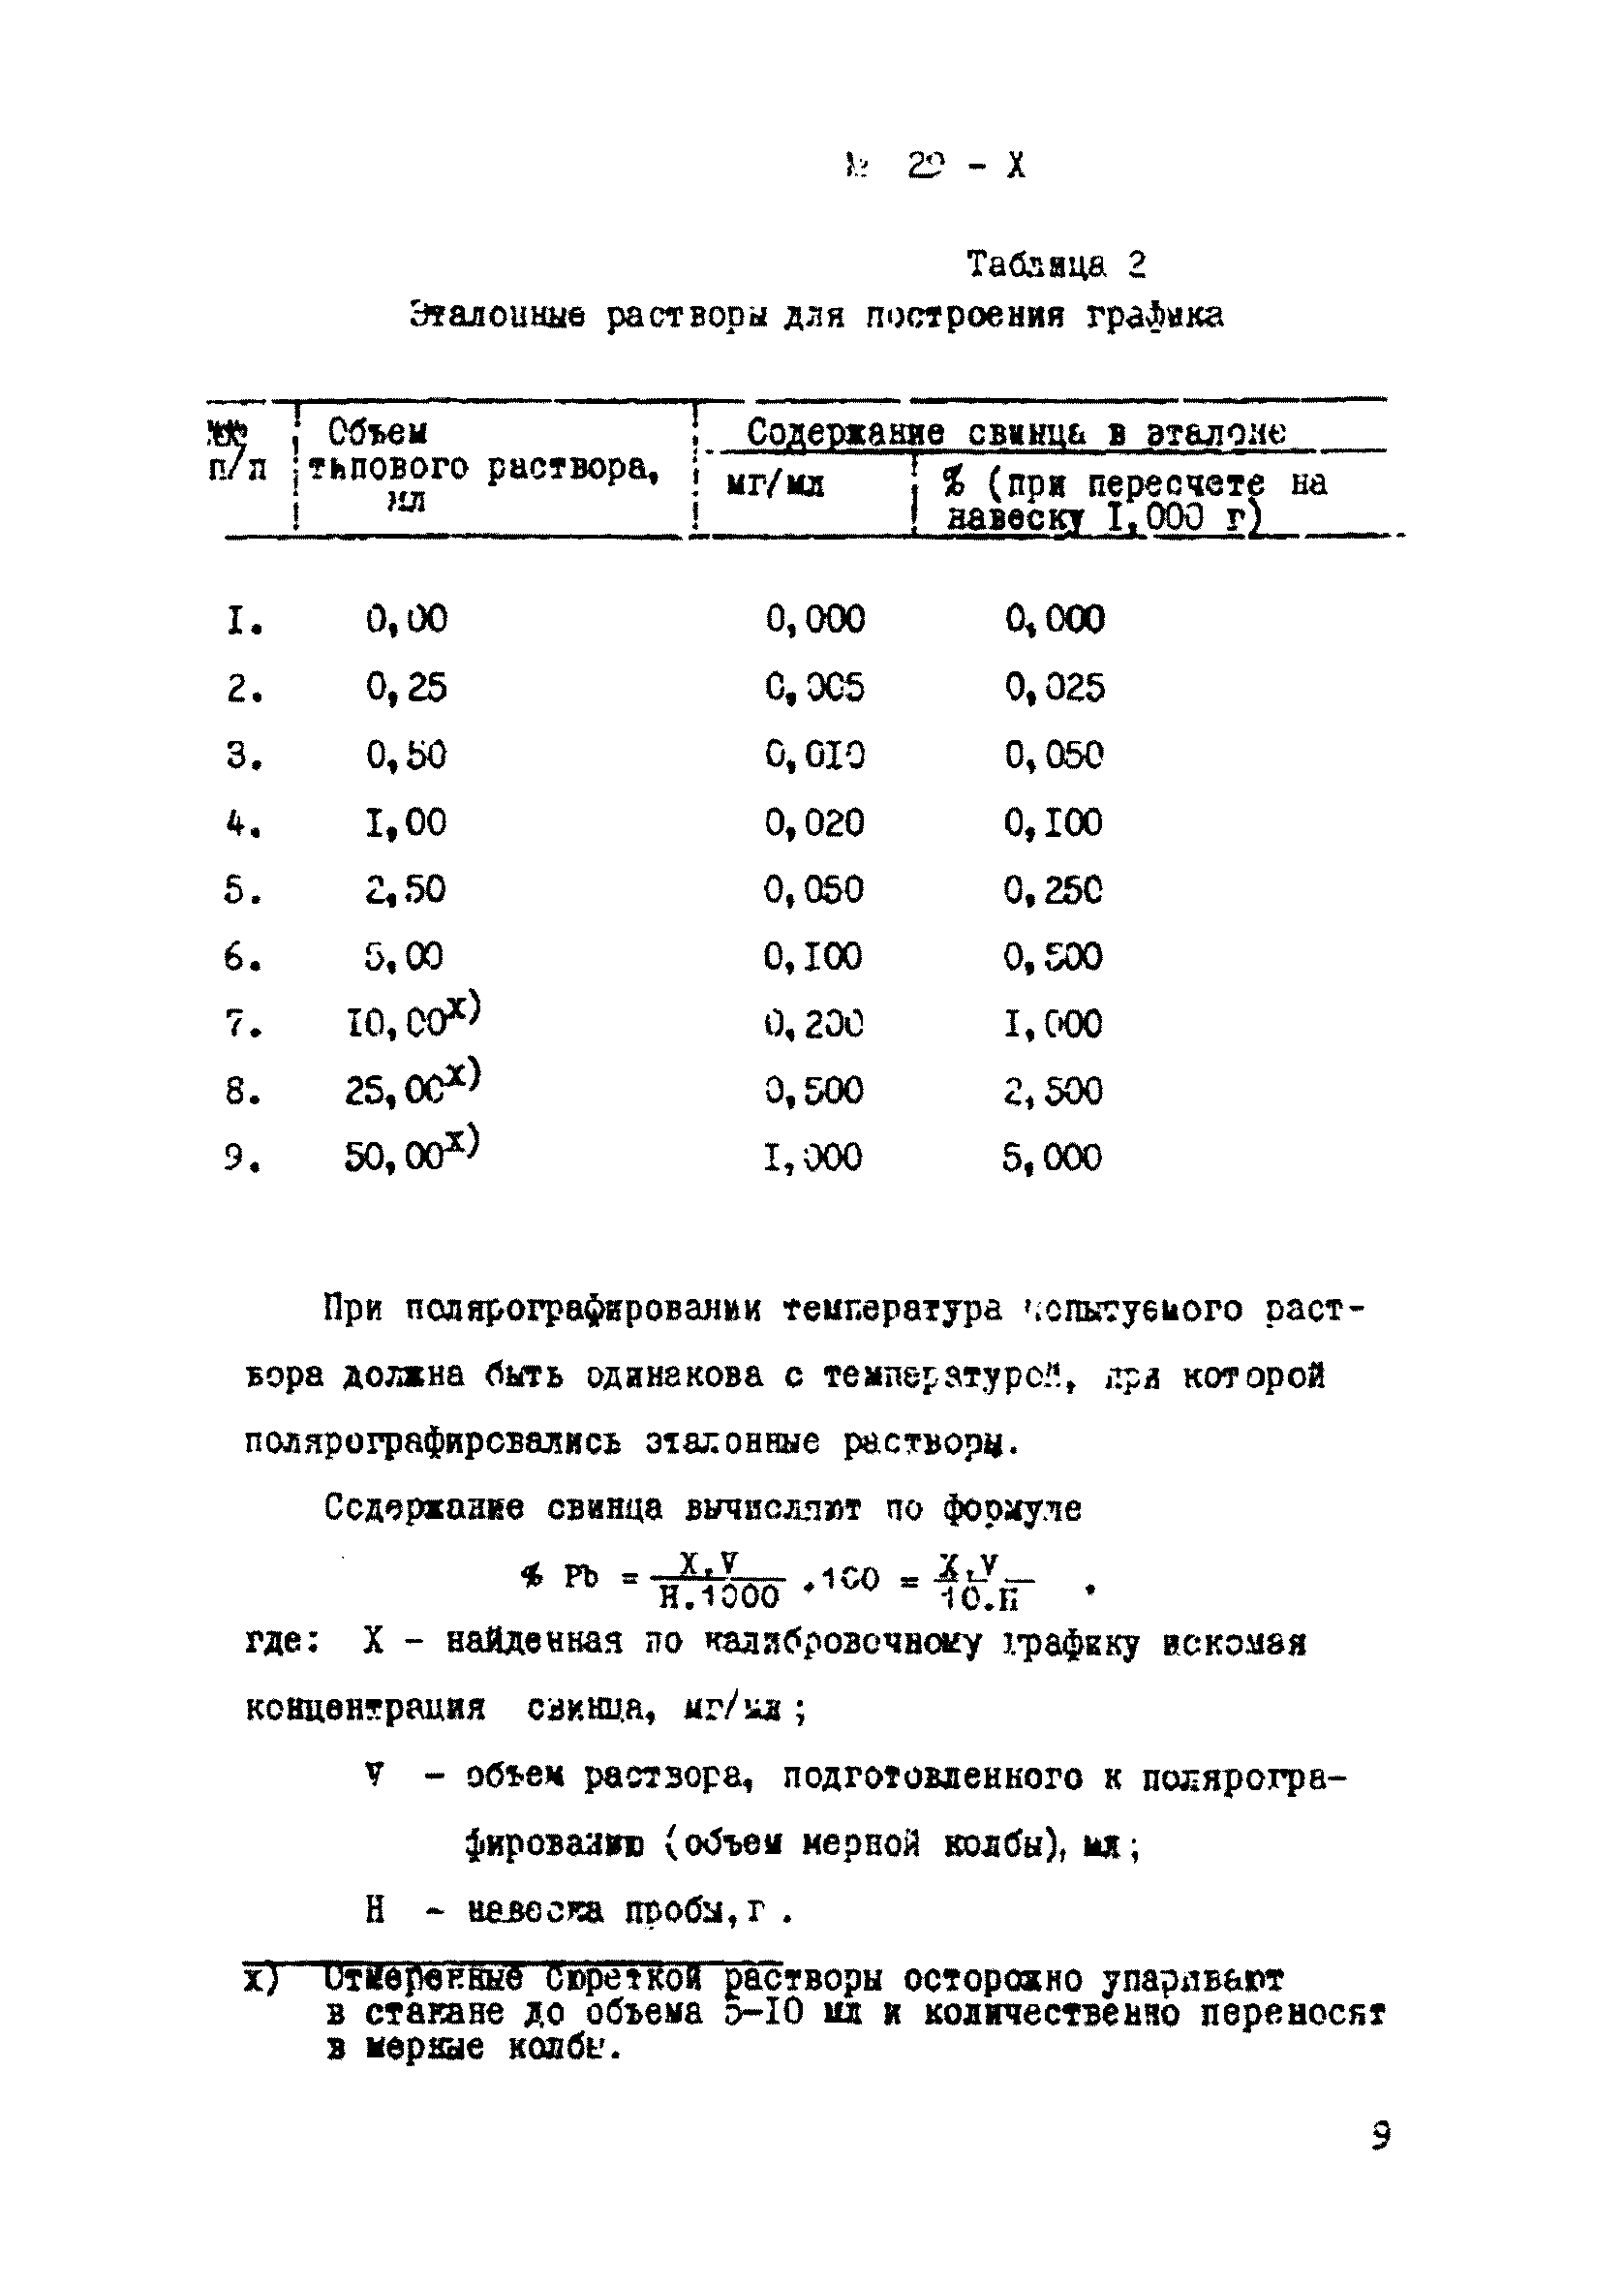 Инструкция НСАМ 29-Х